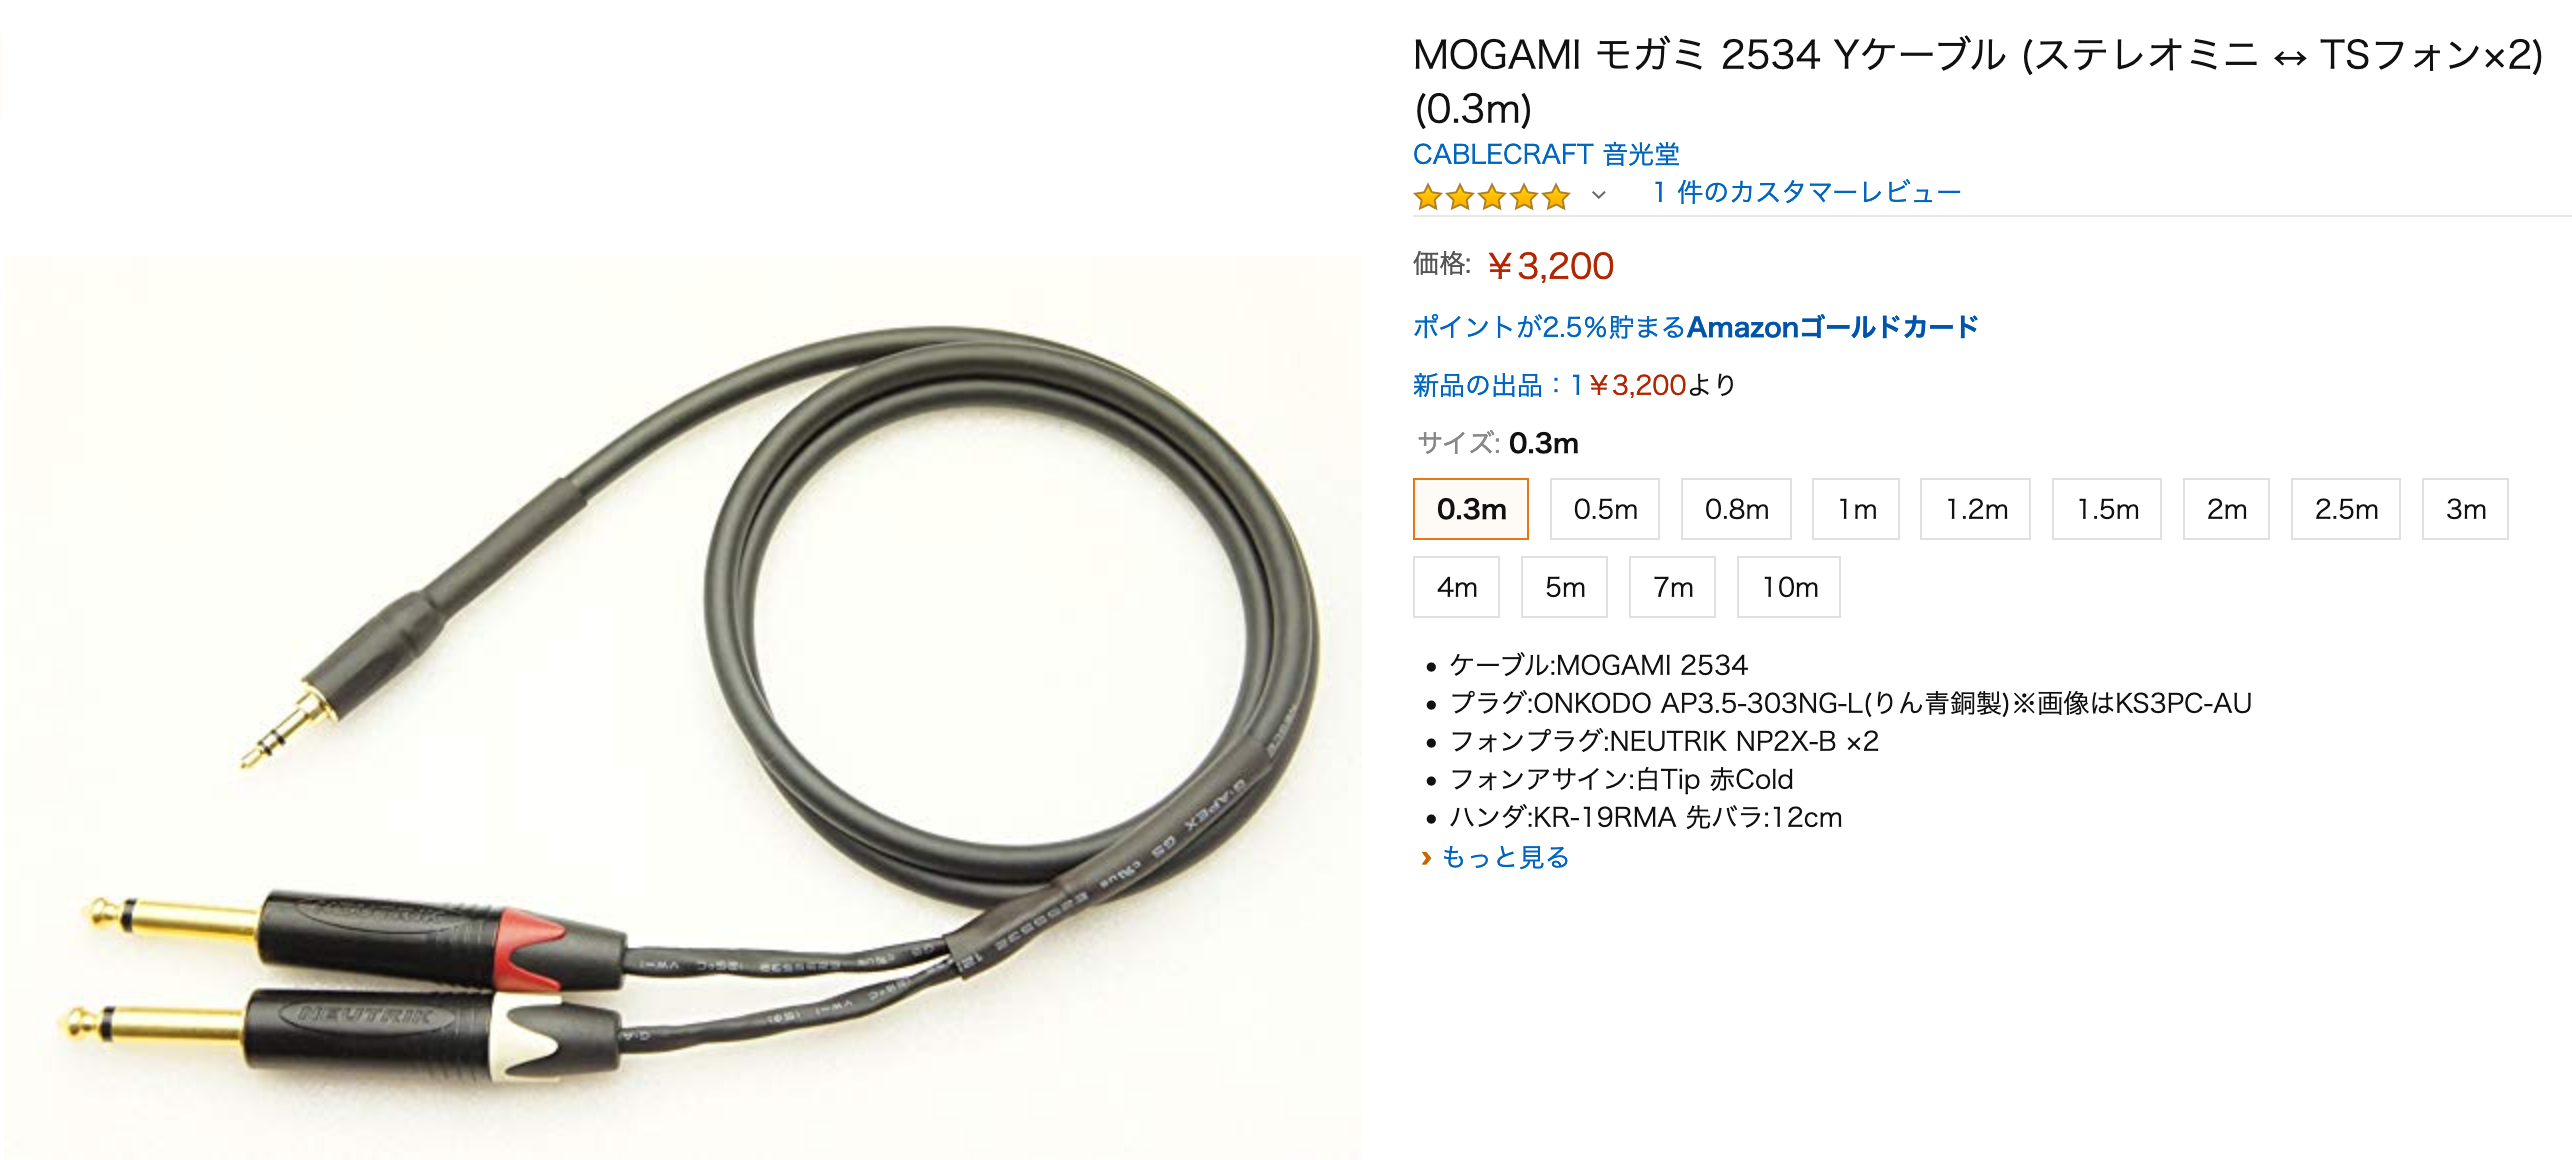 MOGAMI 2549 XLR(オス)→TSフォン 2本ペアケーブル (3m) :20230215004429-00236:hinasack-ys -  通販 - Yahoo!ショッピング - オーディオ機器